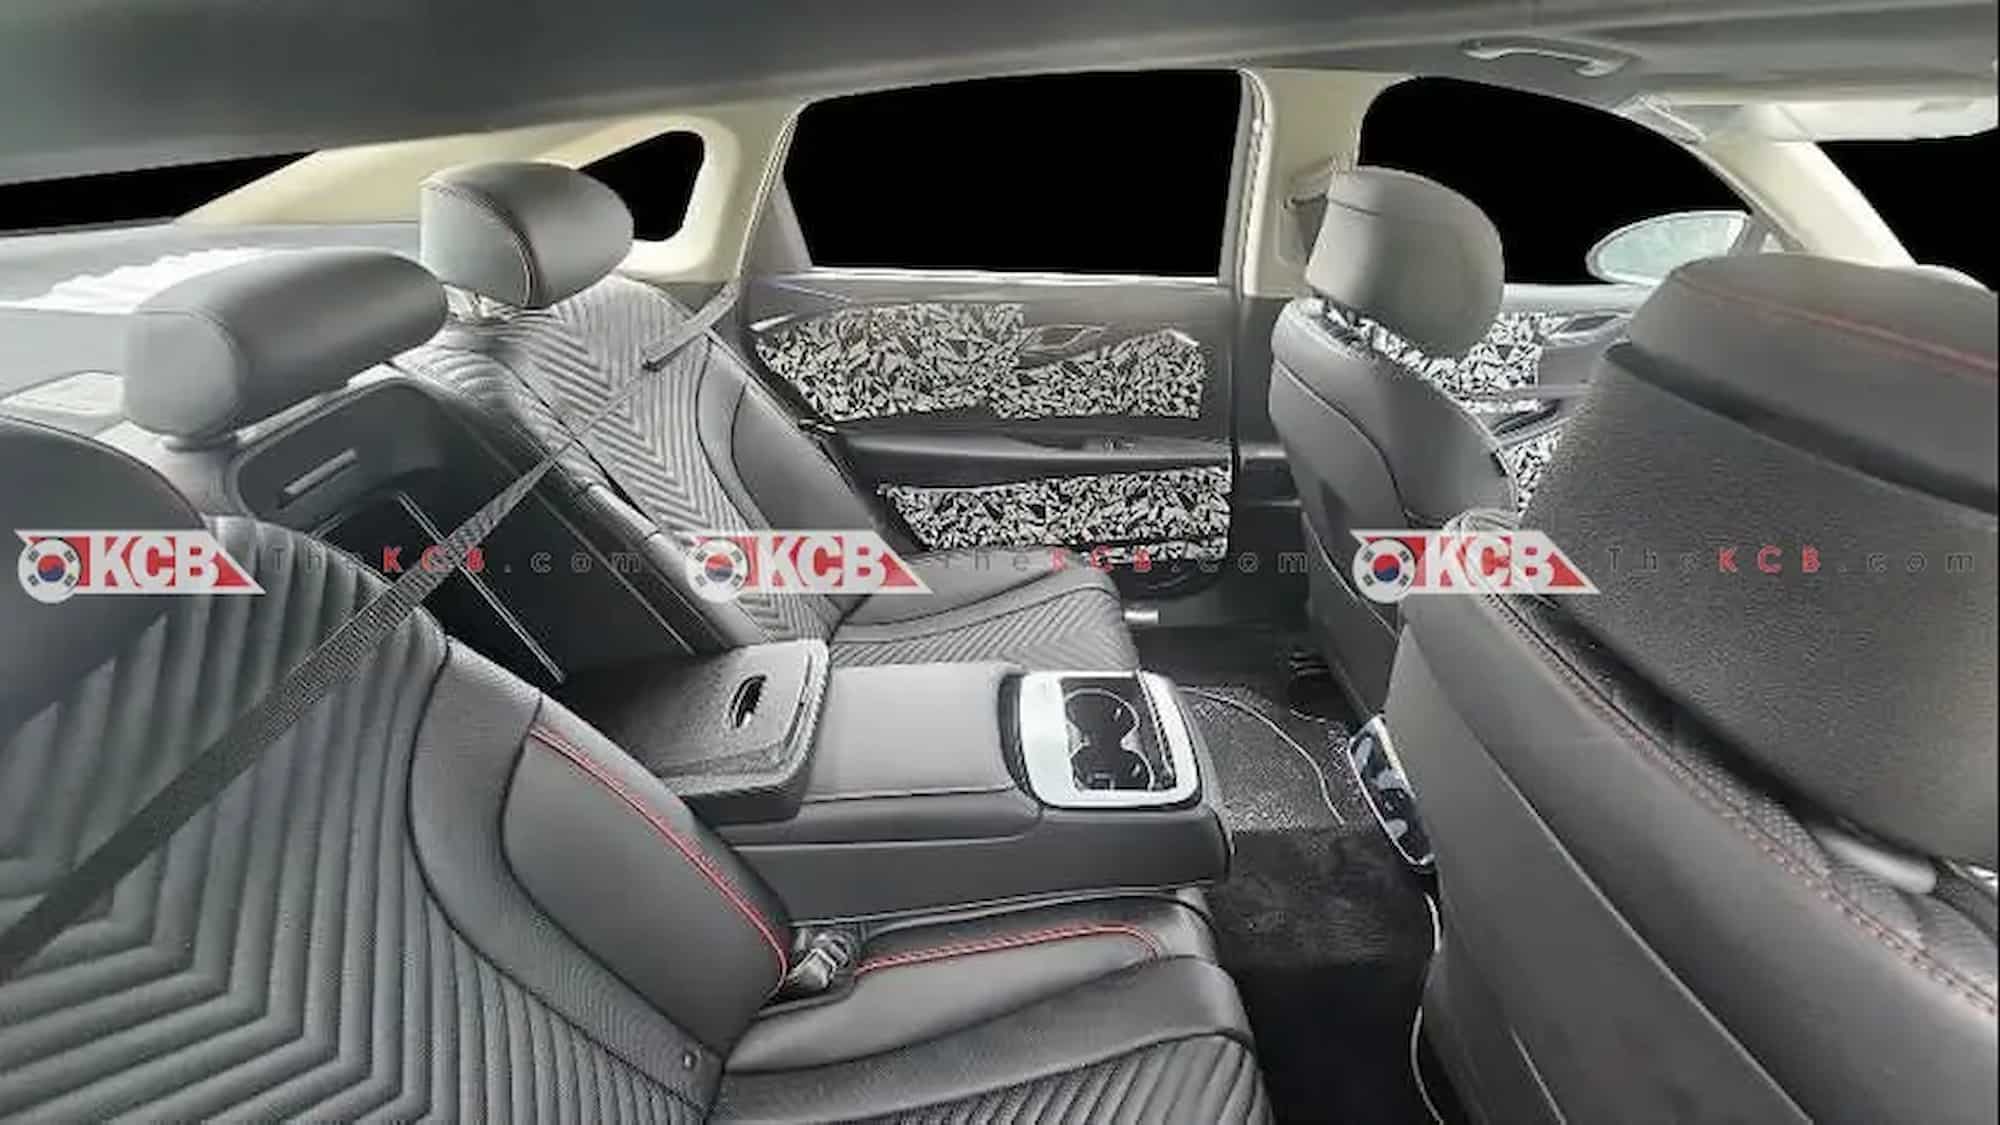 genesis g80 facelift interior leaked 3.jpg